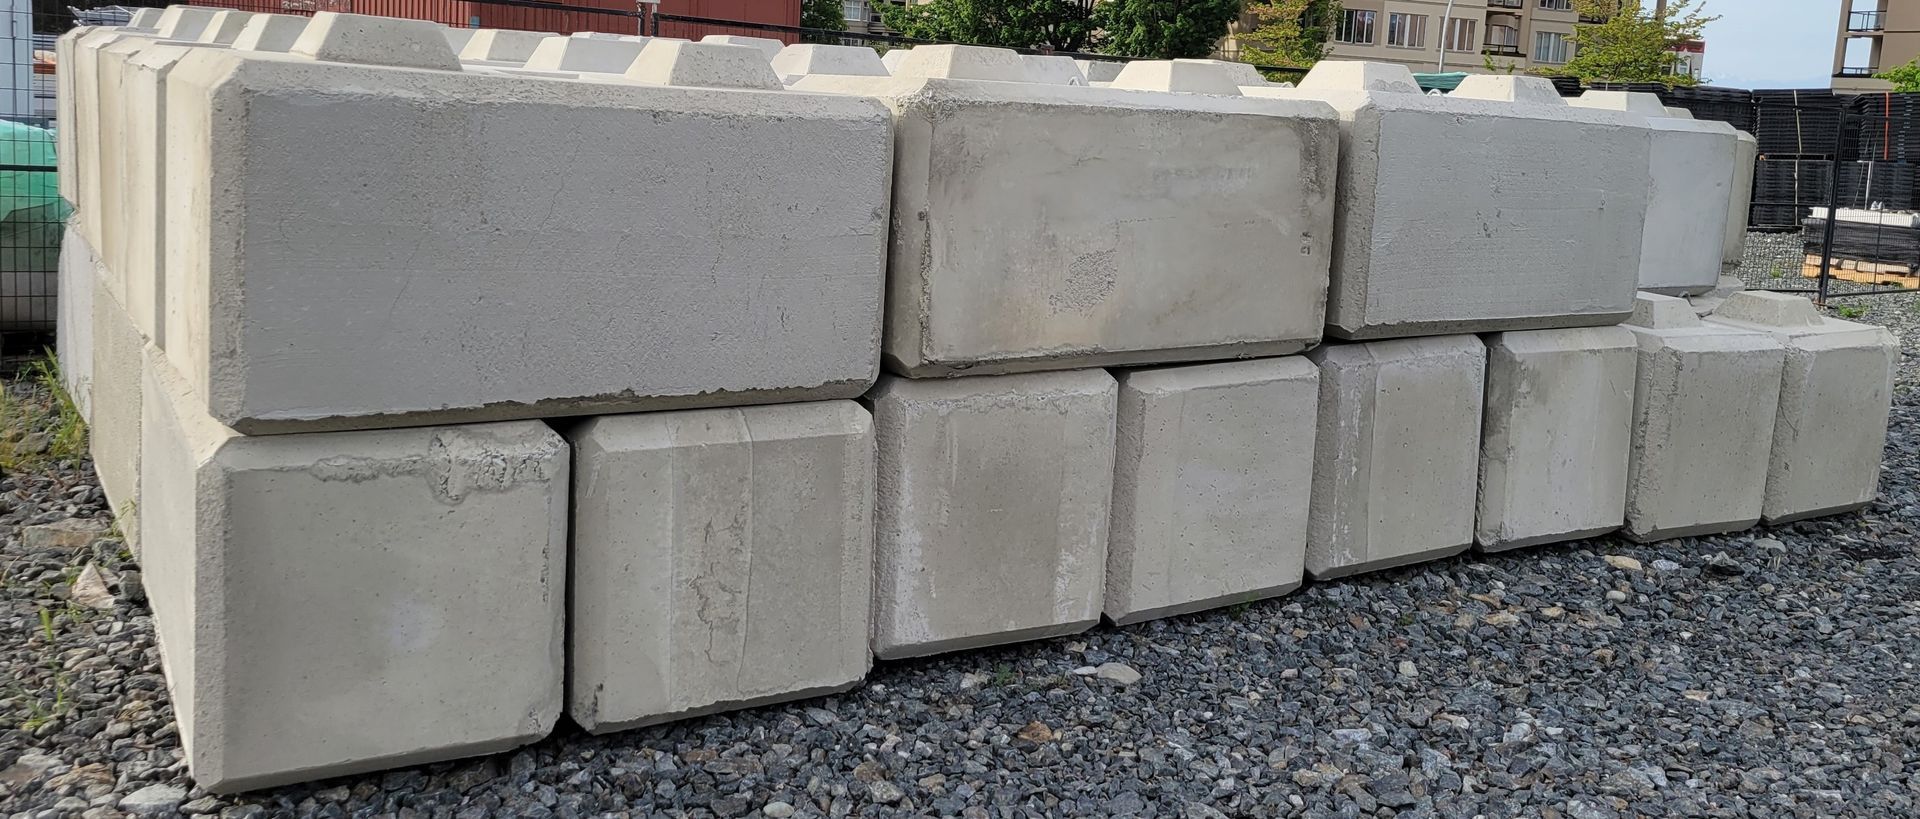 Large pre-formed concrete blocks